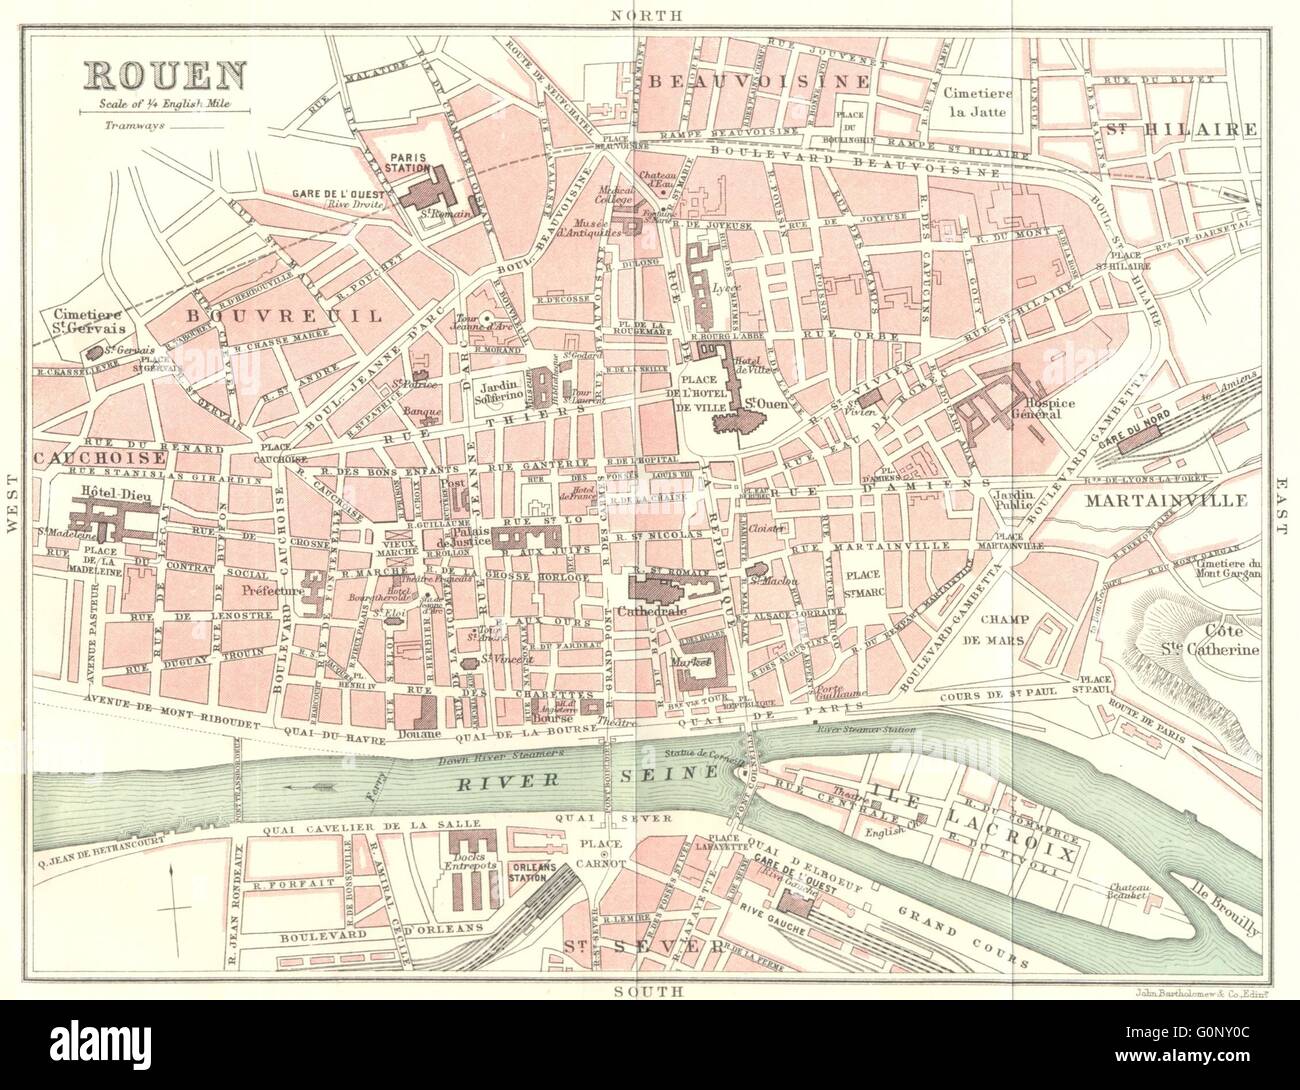 SEINE-MARITIME: Rouen, 1913 antique map Stock Photo